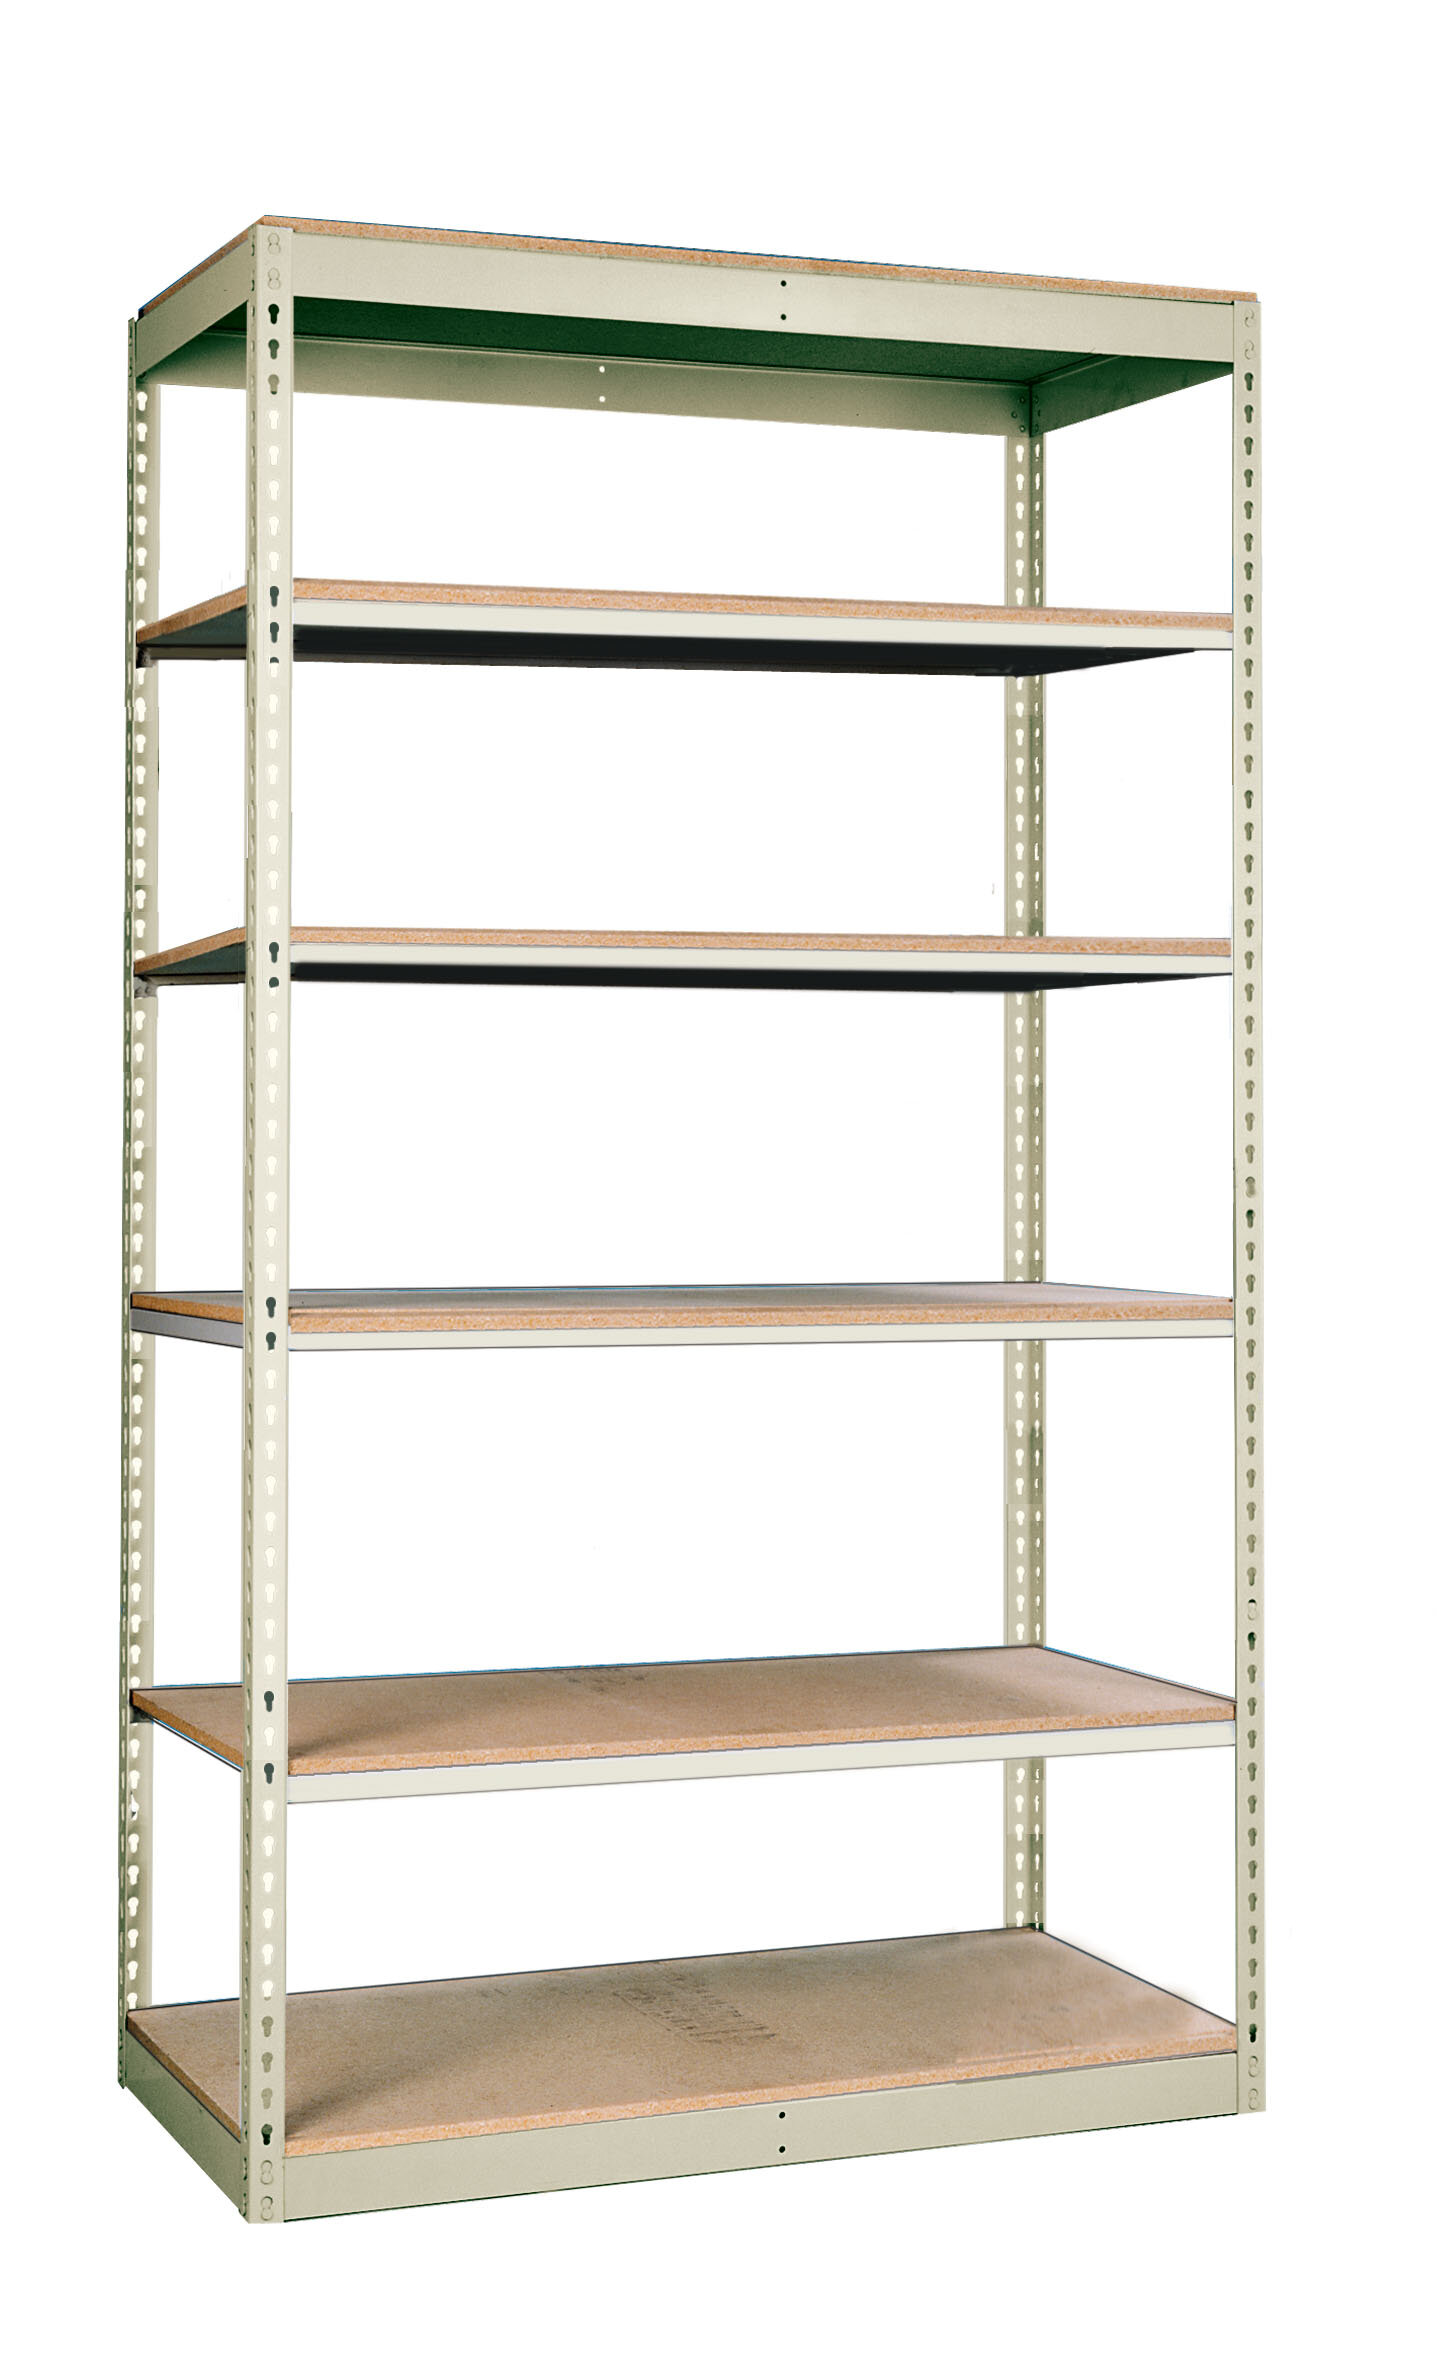 single shelf unit